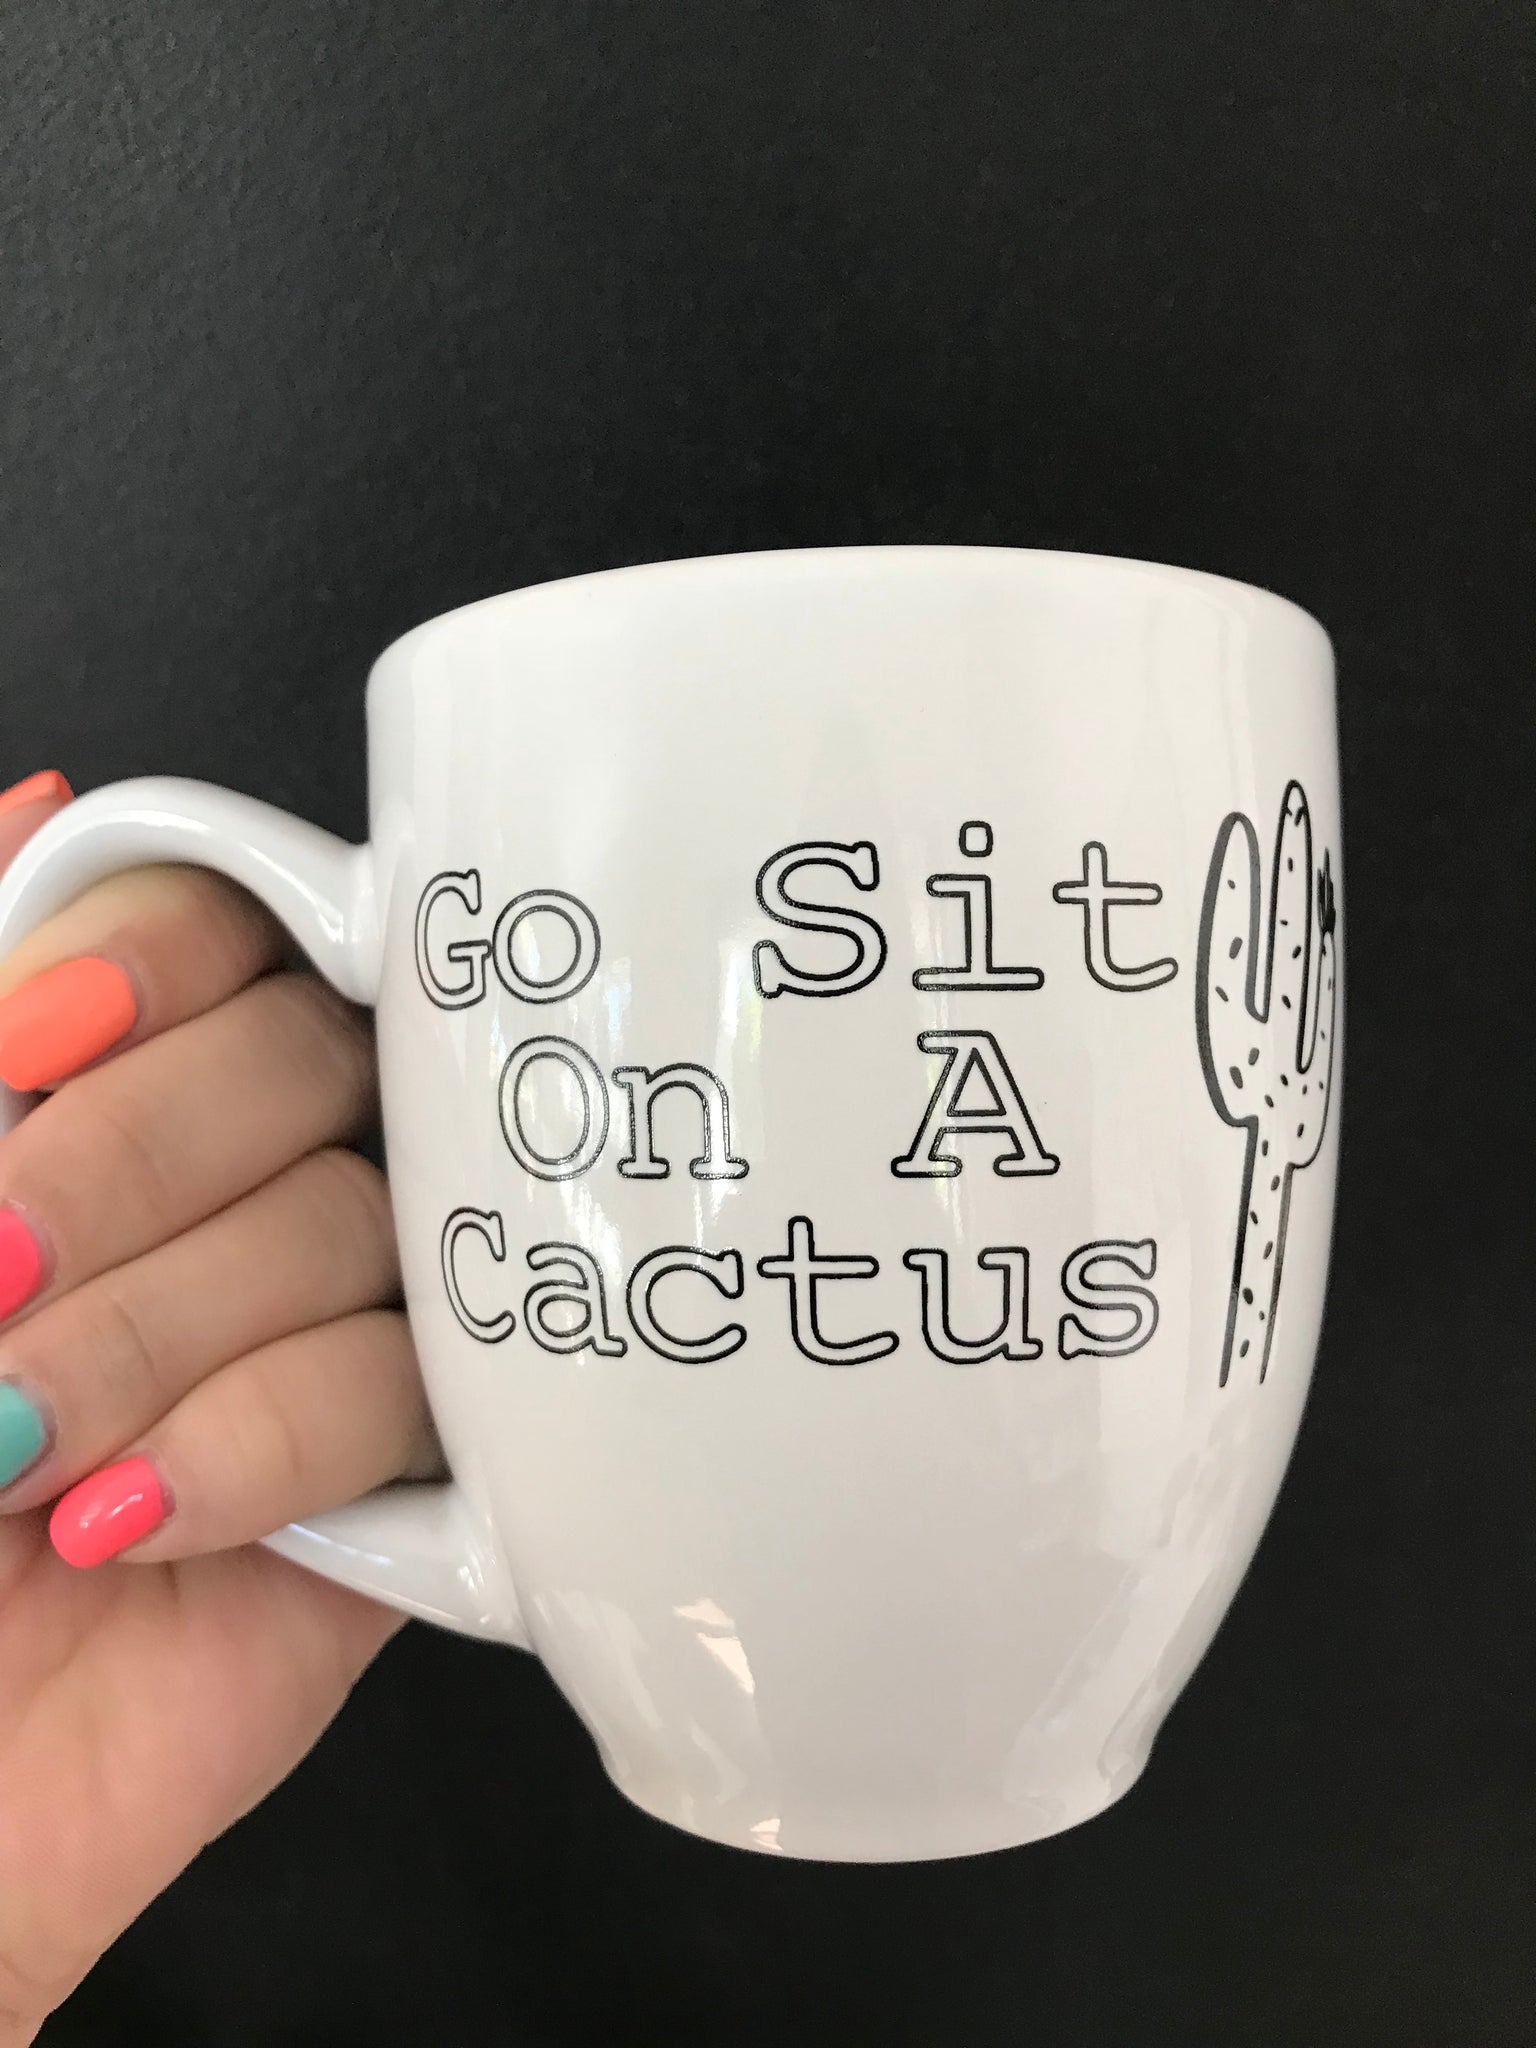 Go sit on a cactus